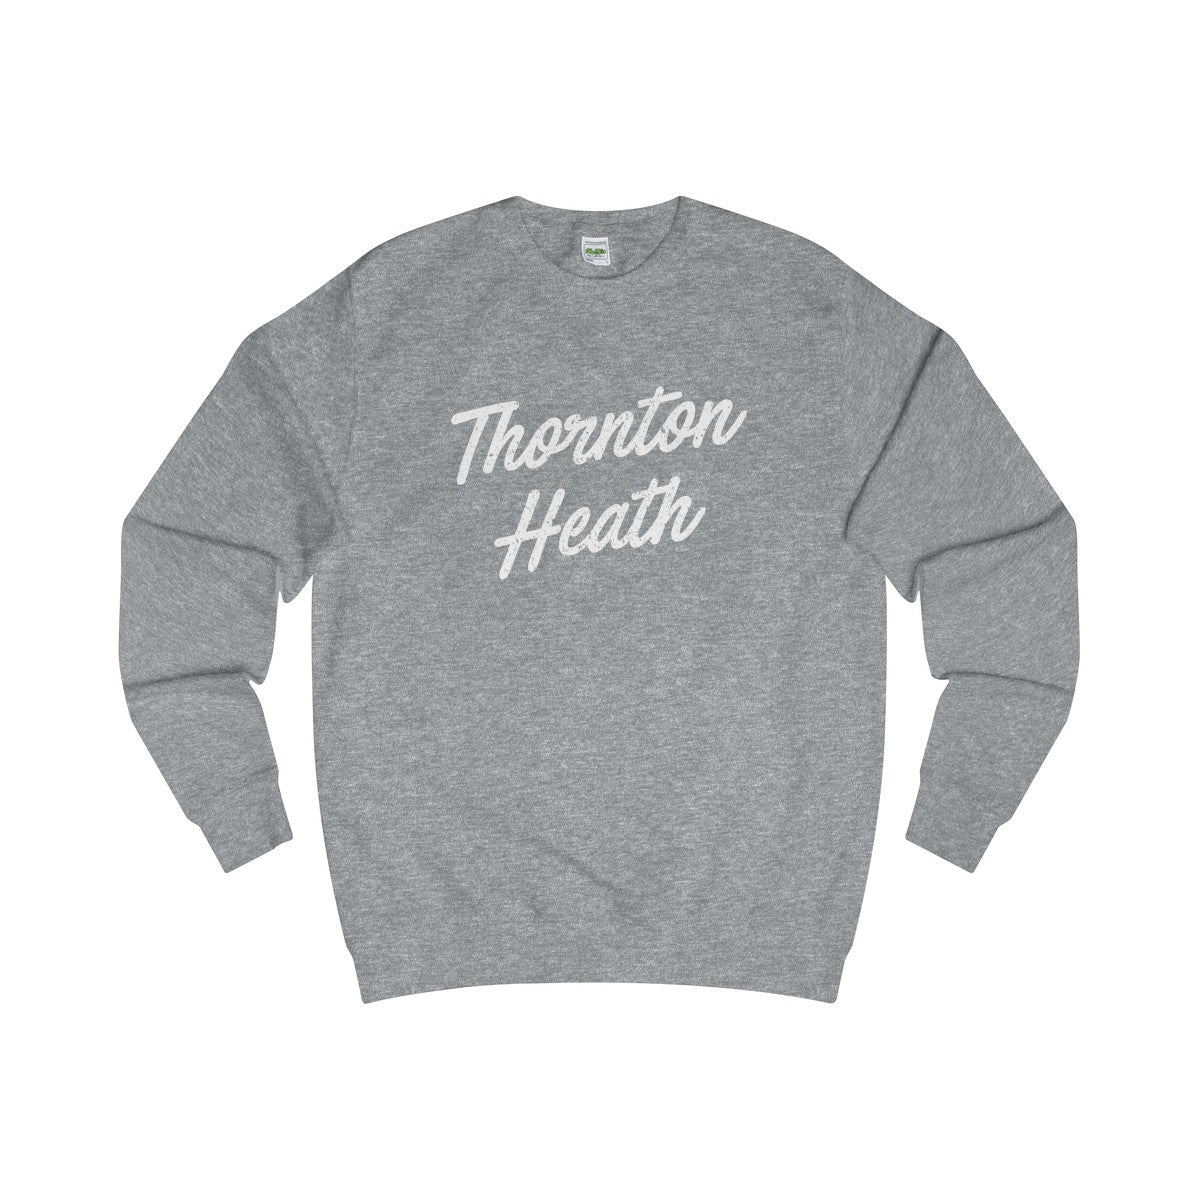 Thornton Heath Scripted Sweater